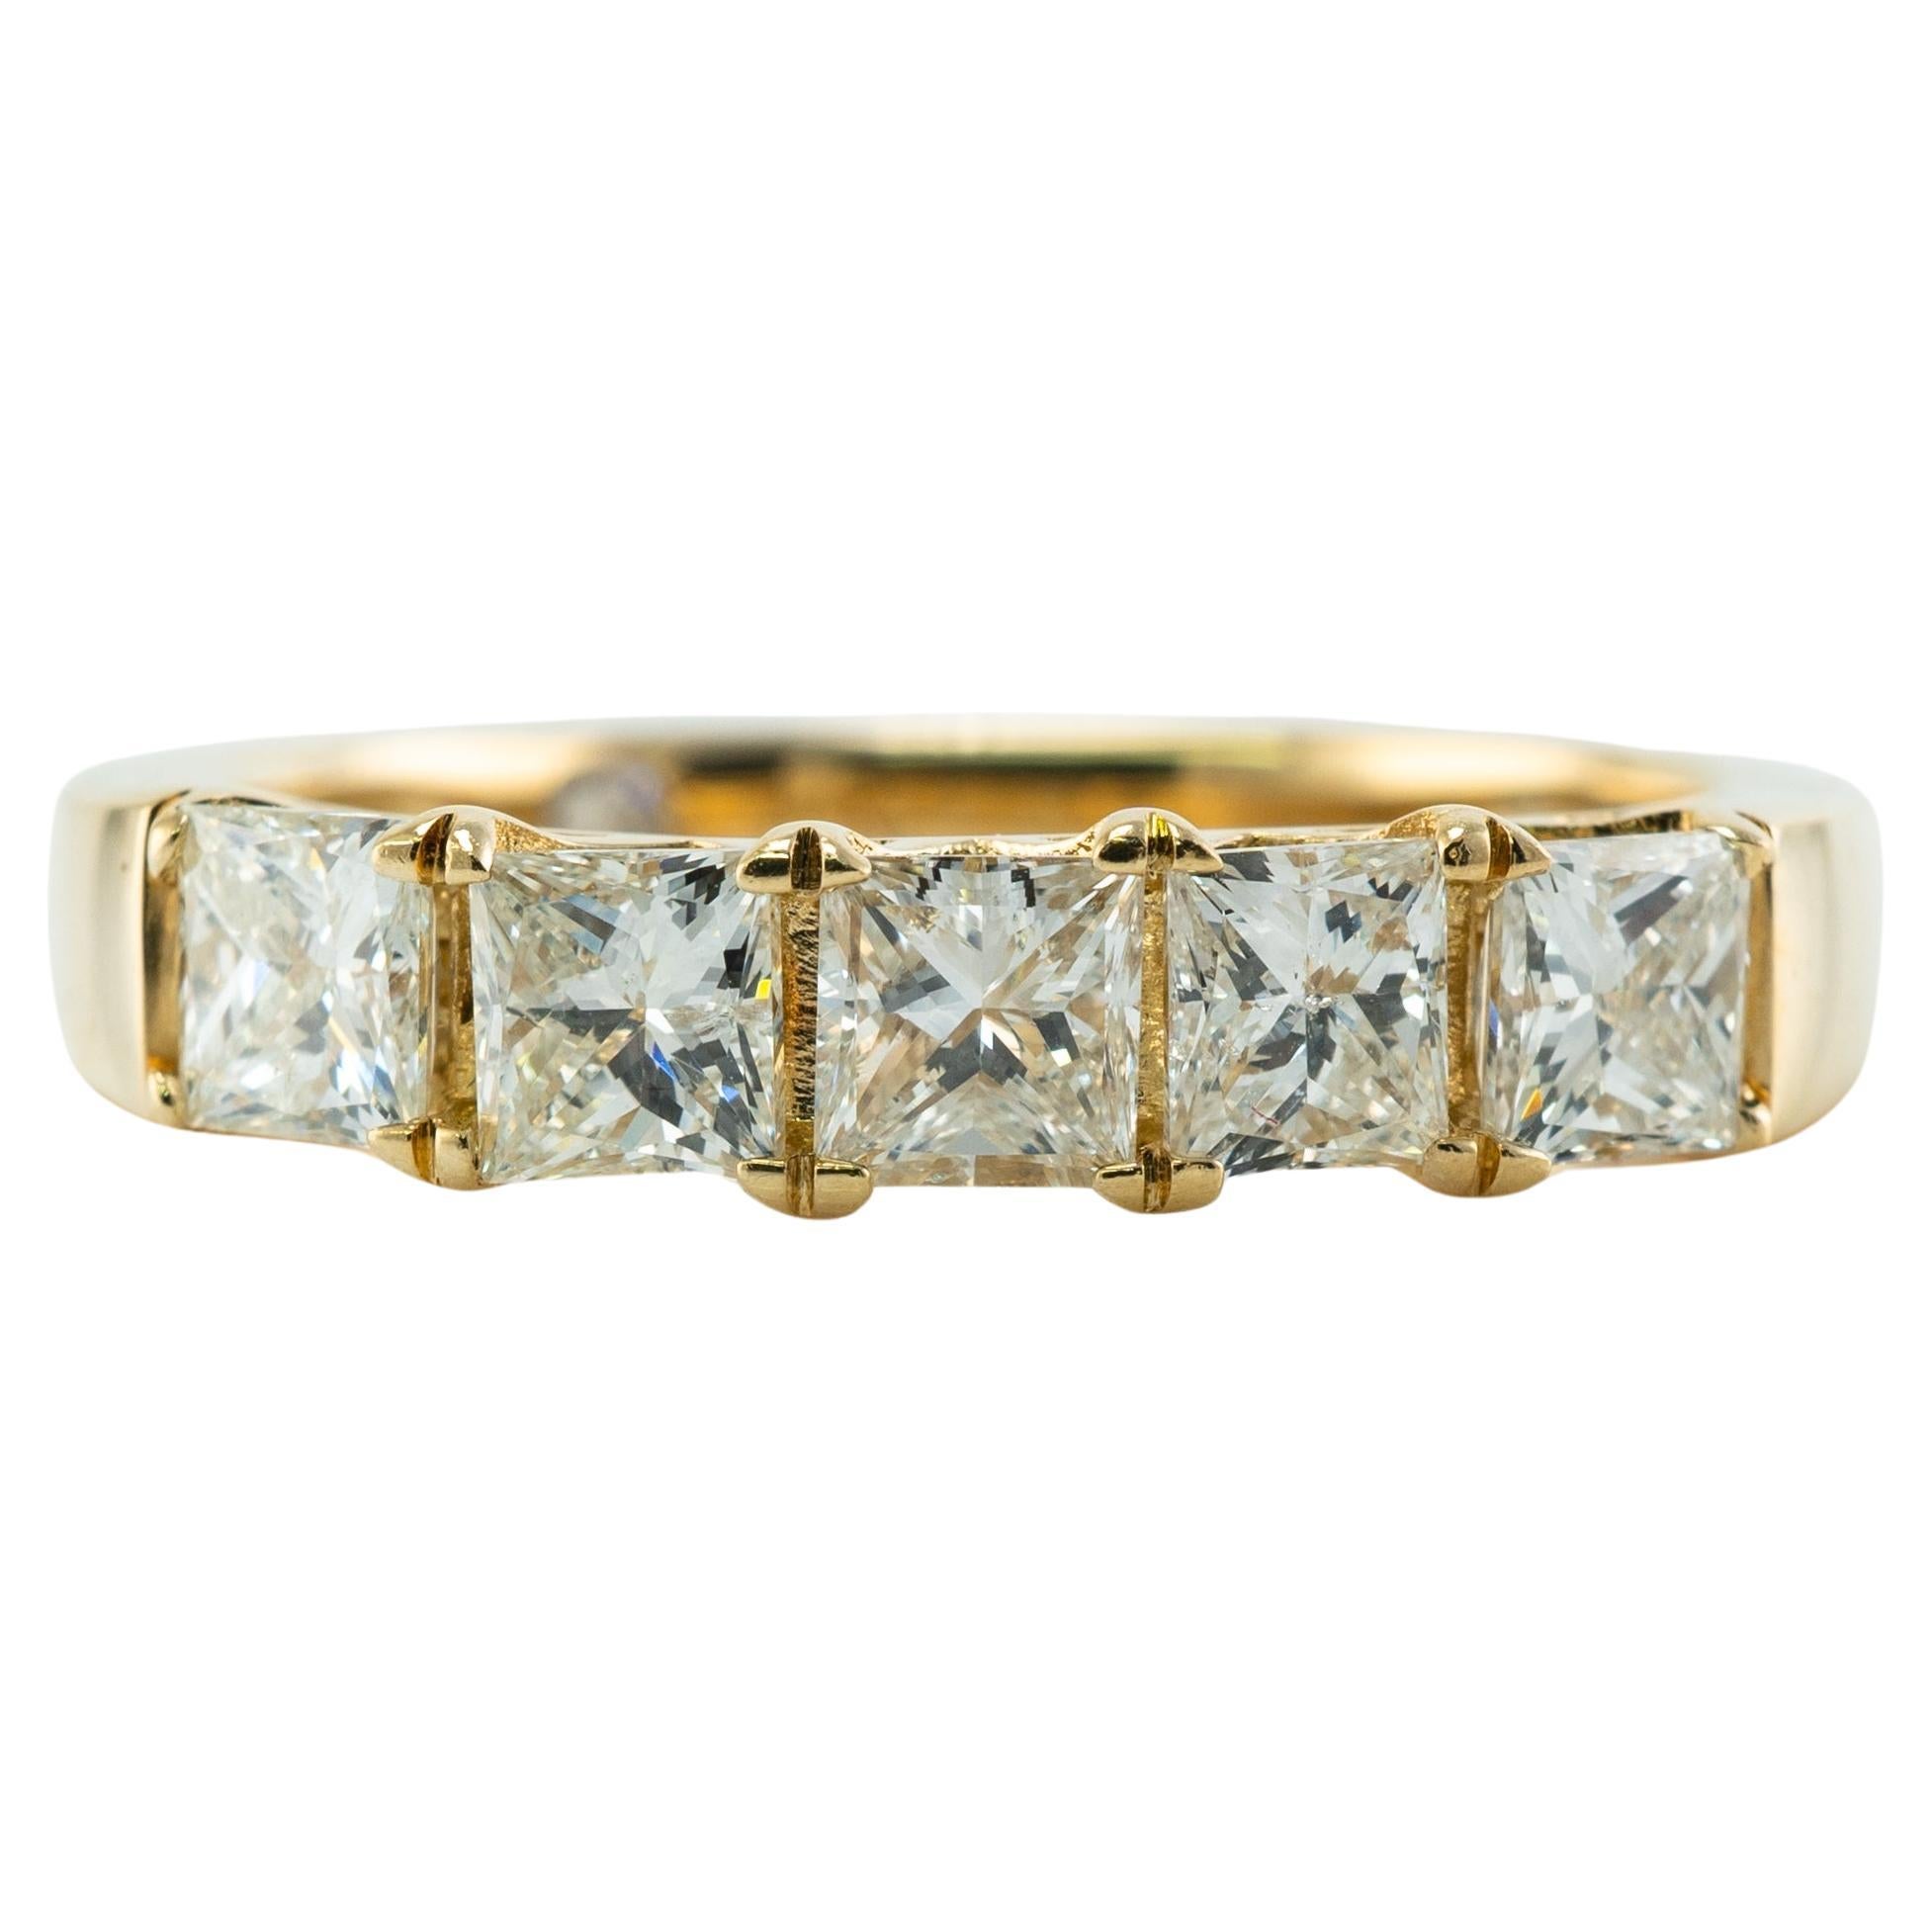 Natural Diamond Ring Princess cut 14K Gold Band 1.34 cttw